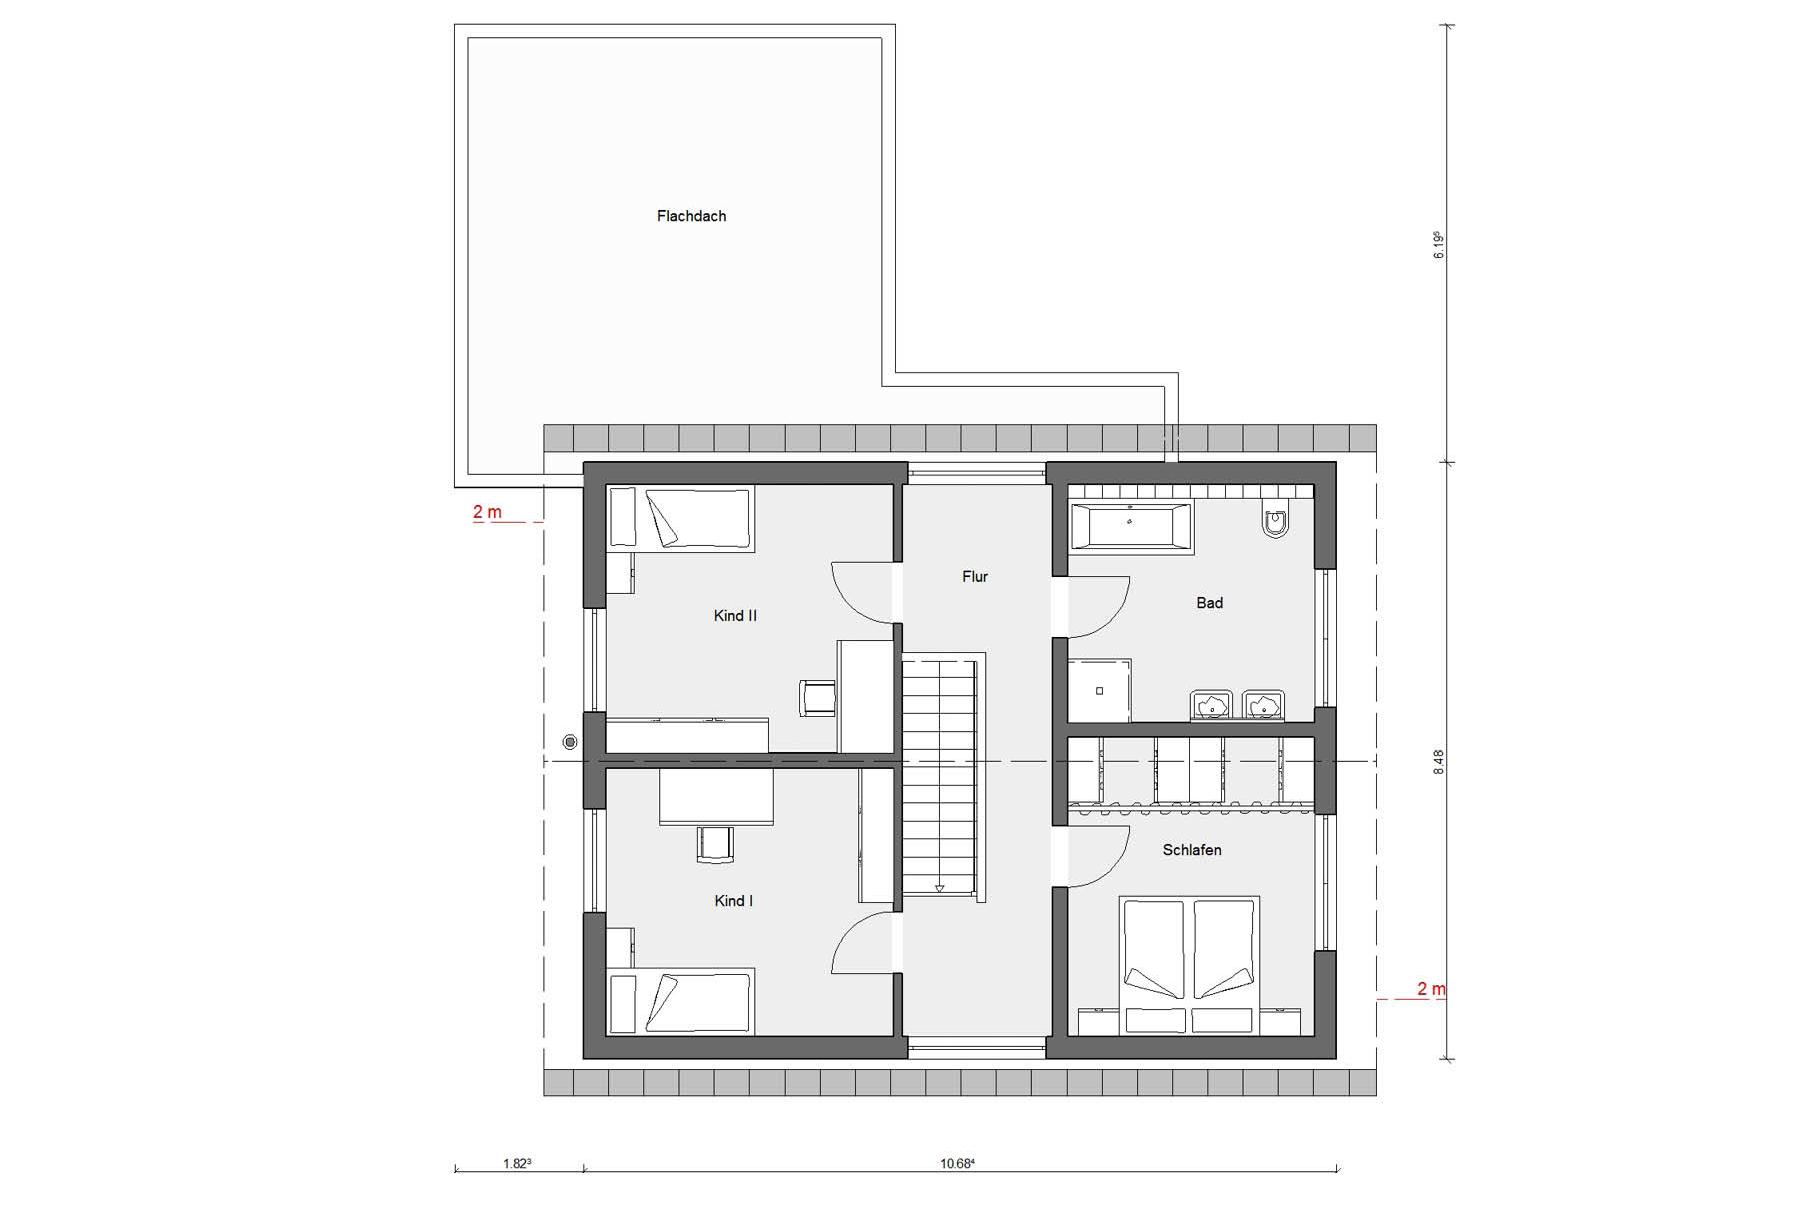 Pianta soffitta E 15-179.1 Casa energetica per famiglie 